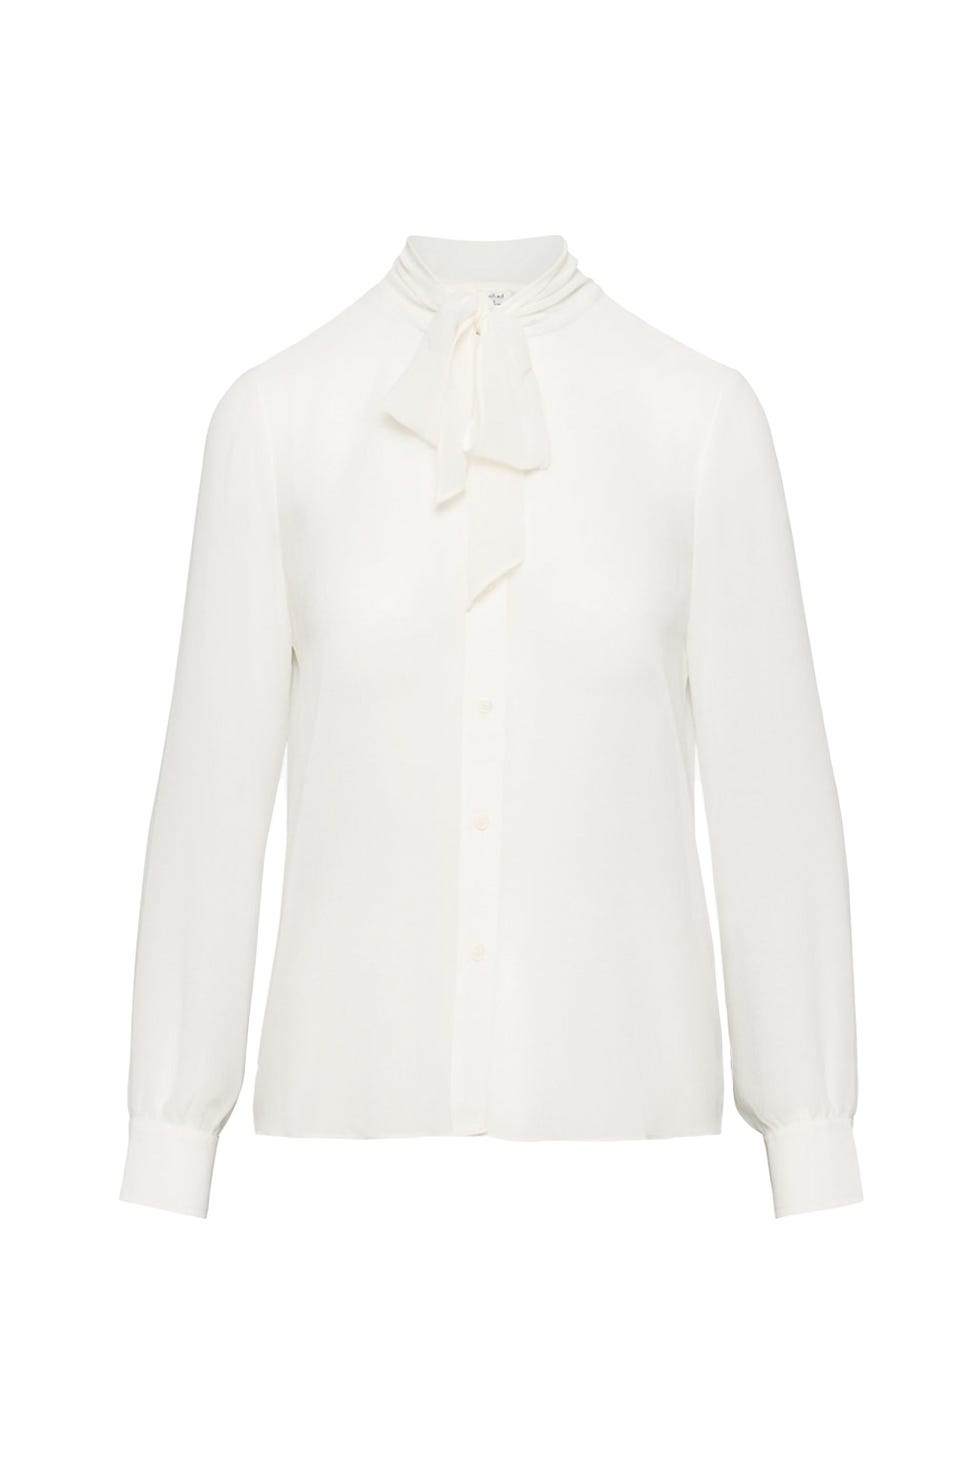 15 Best White Button-Down Shirts for Women — Best Button-Down Shirts